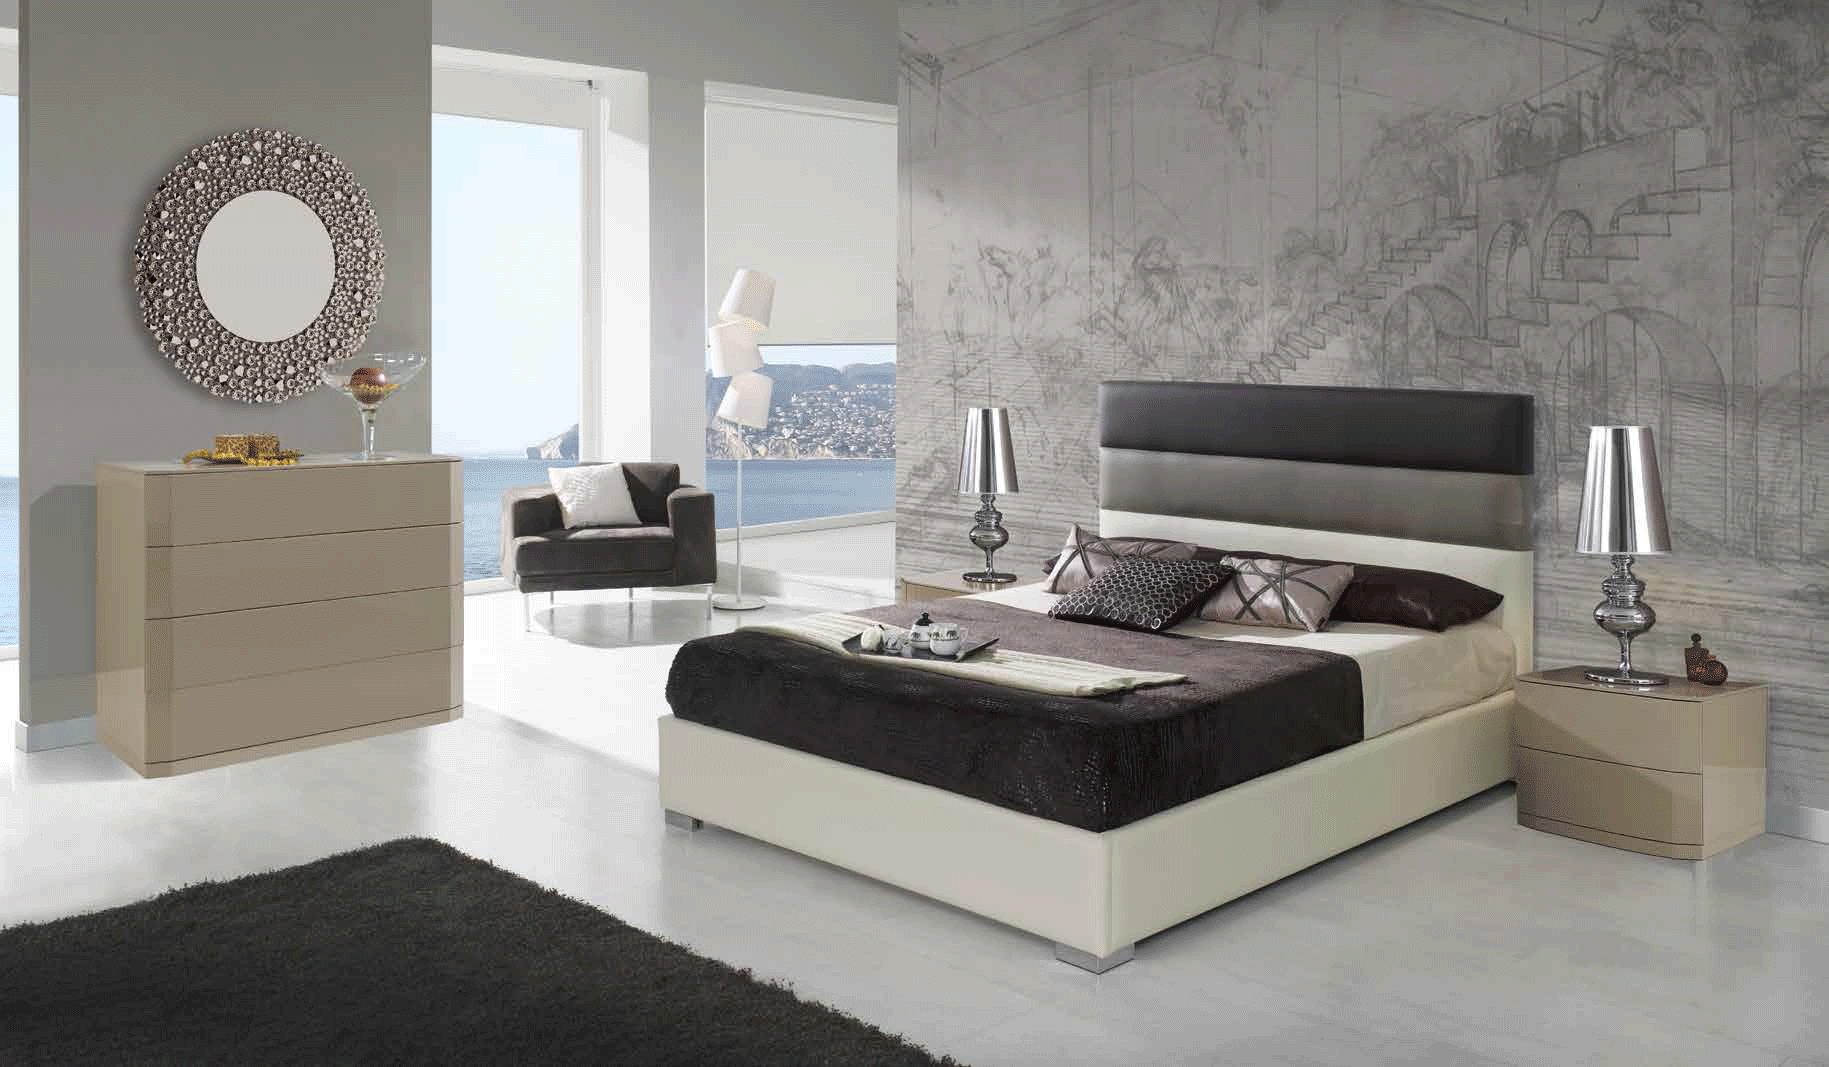 Brands Garcia Sabate, Modern Bedroom Spain 690 Desiree, M-102, C-102, E-418, LT-3130L-C1C